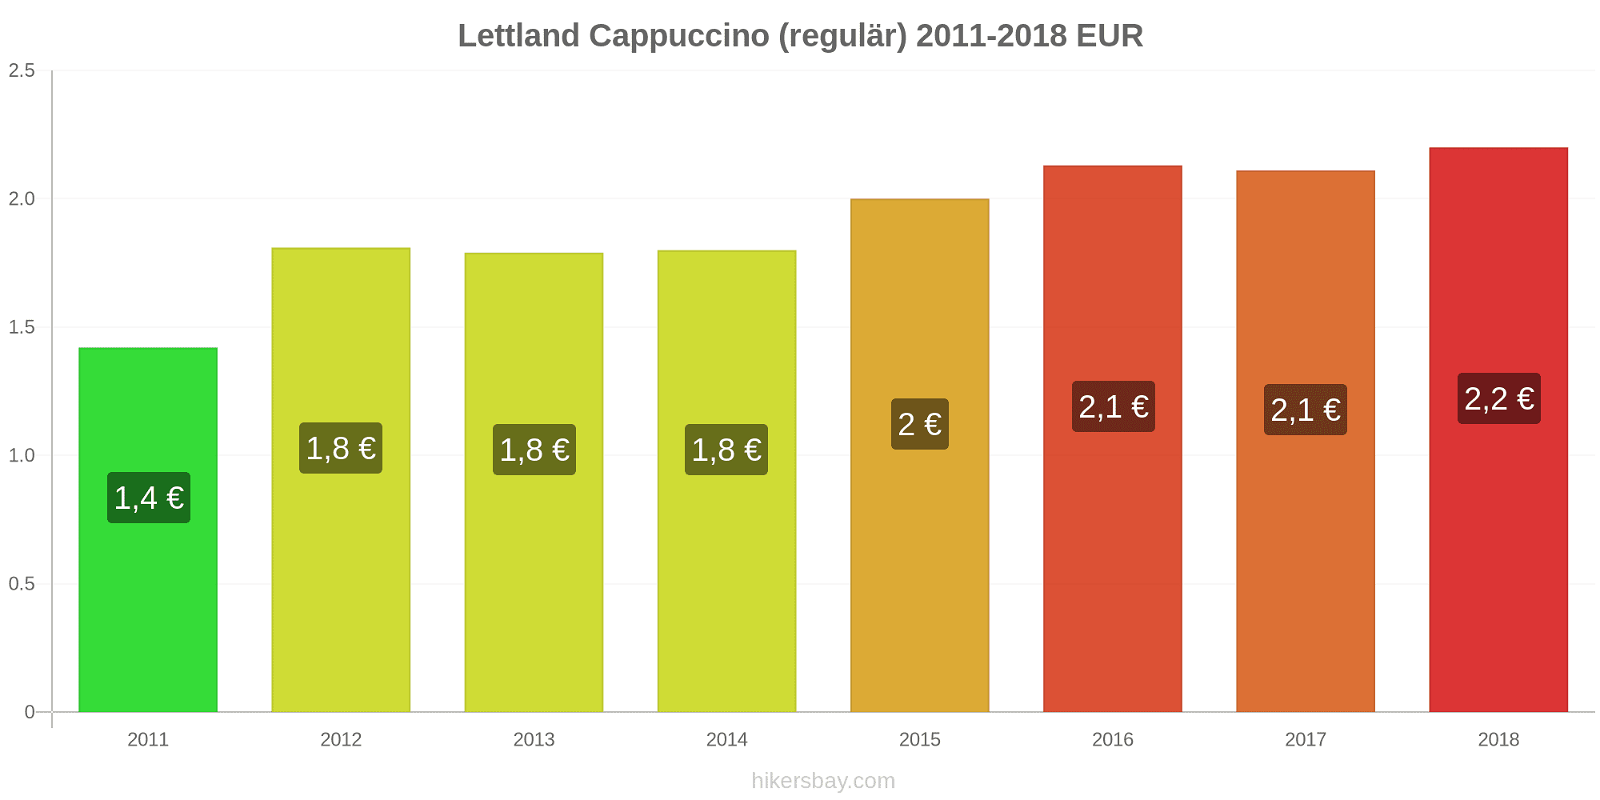 Lettland Preisänderungen Cappuccino (regulär) hikersbay.com